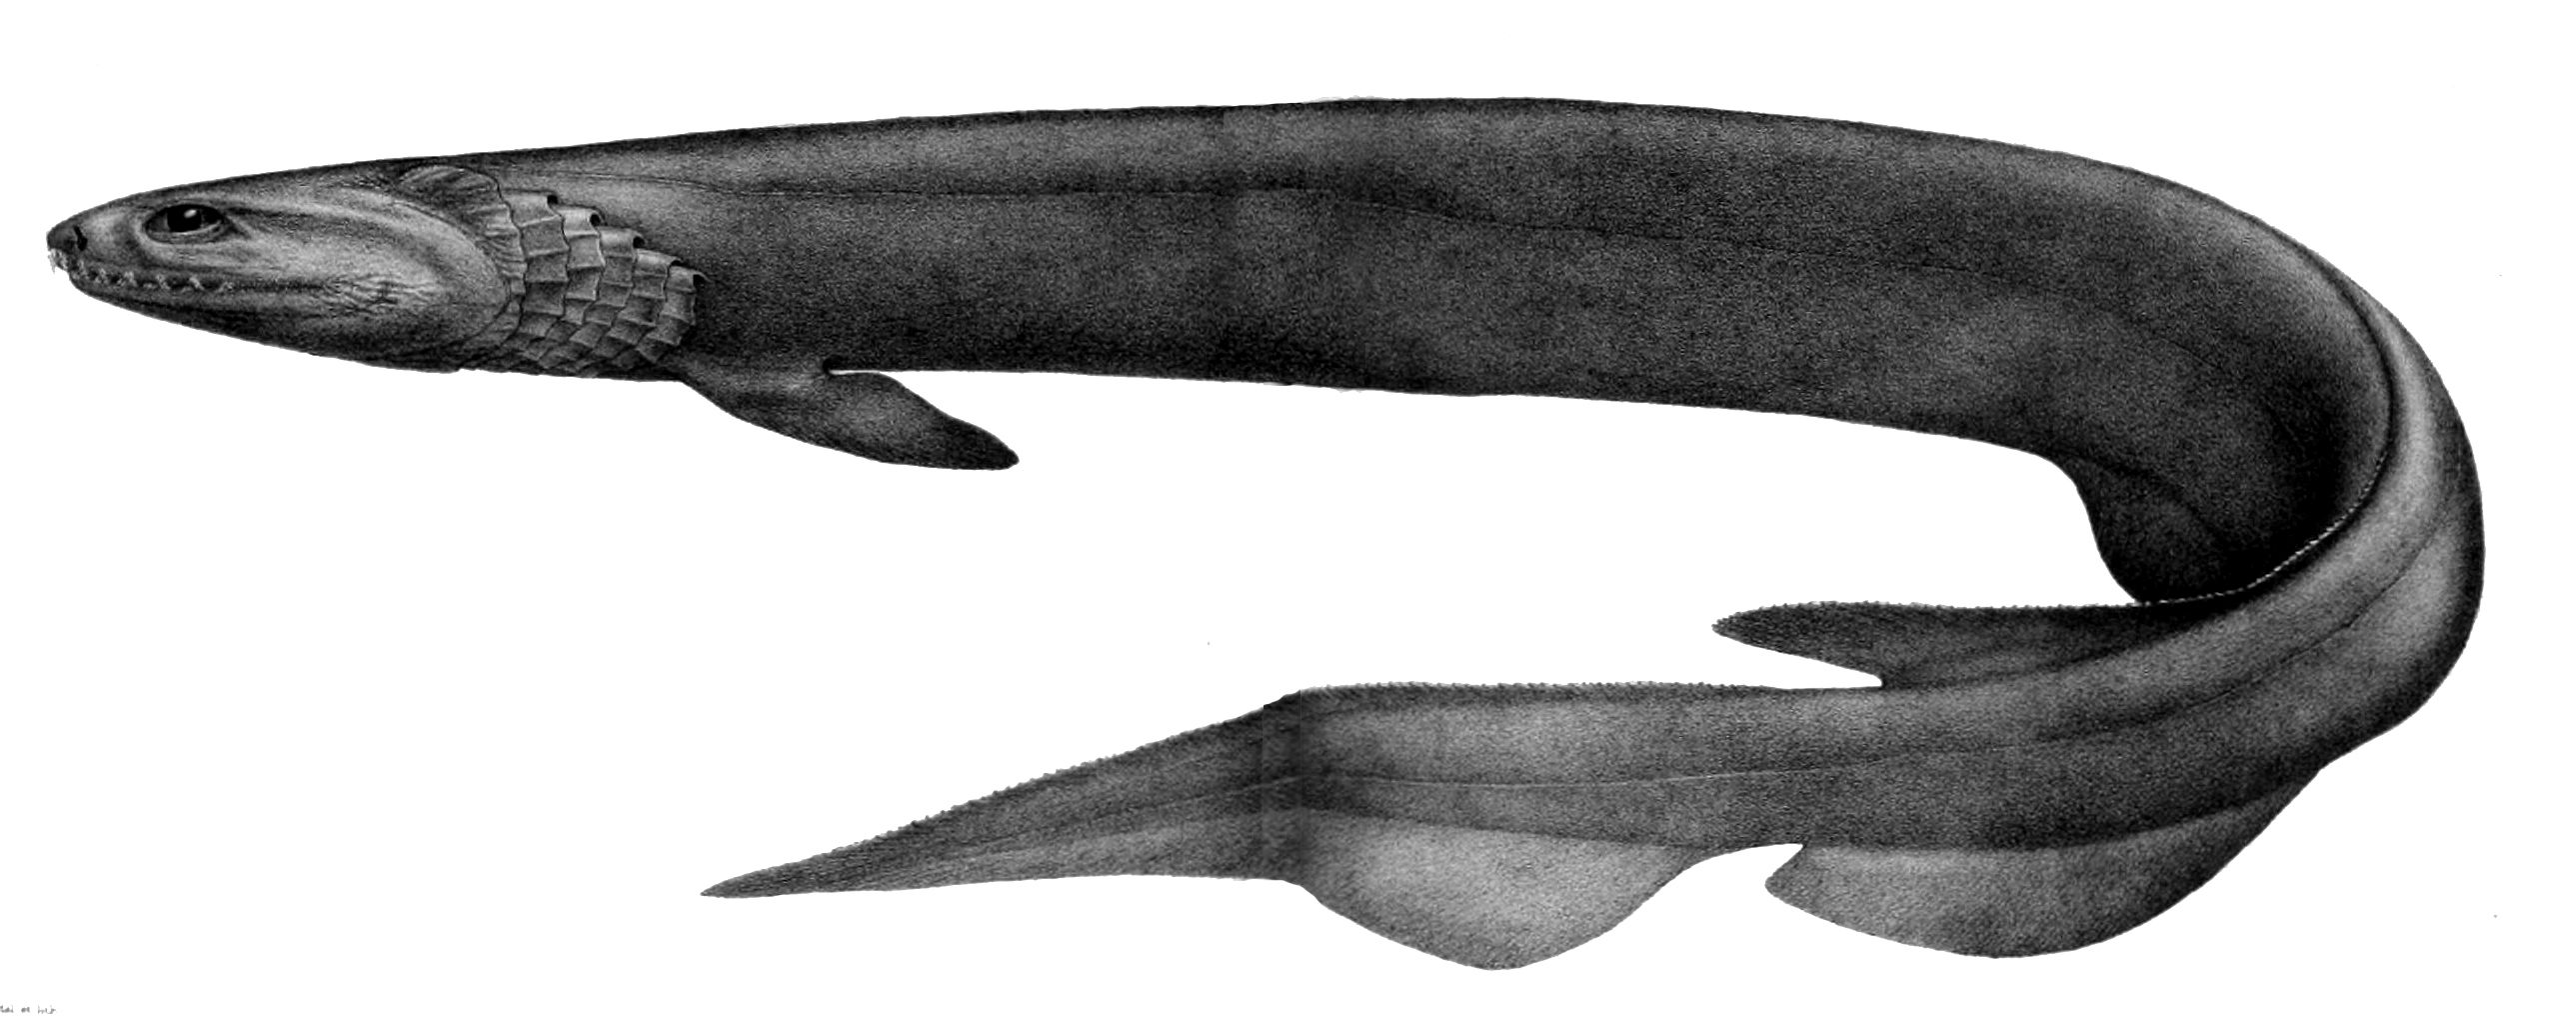 Kragenhai (A. C. L. G. Günther)